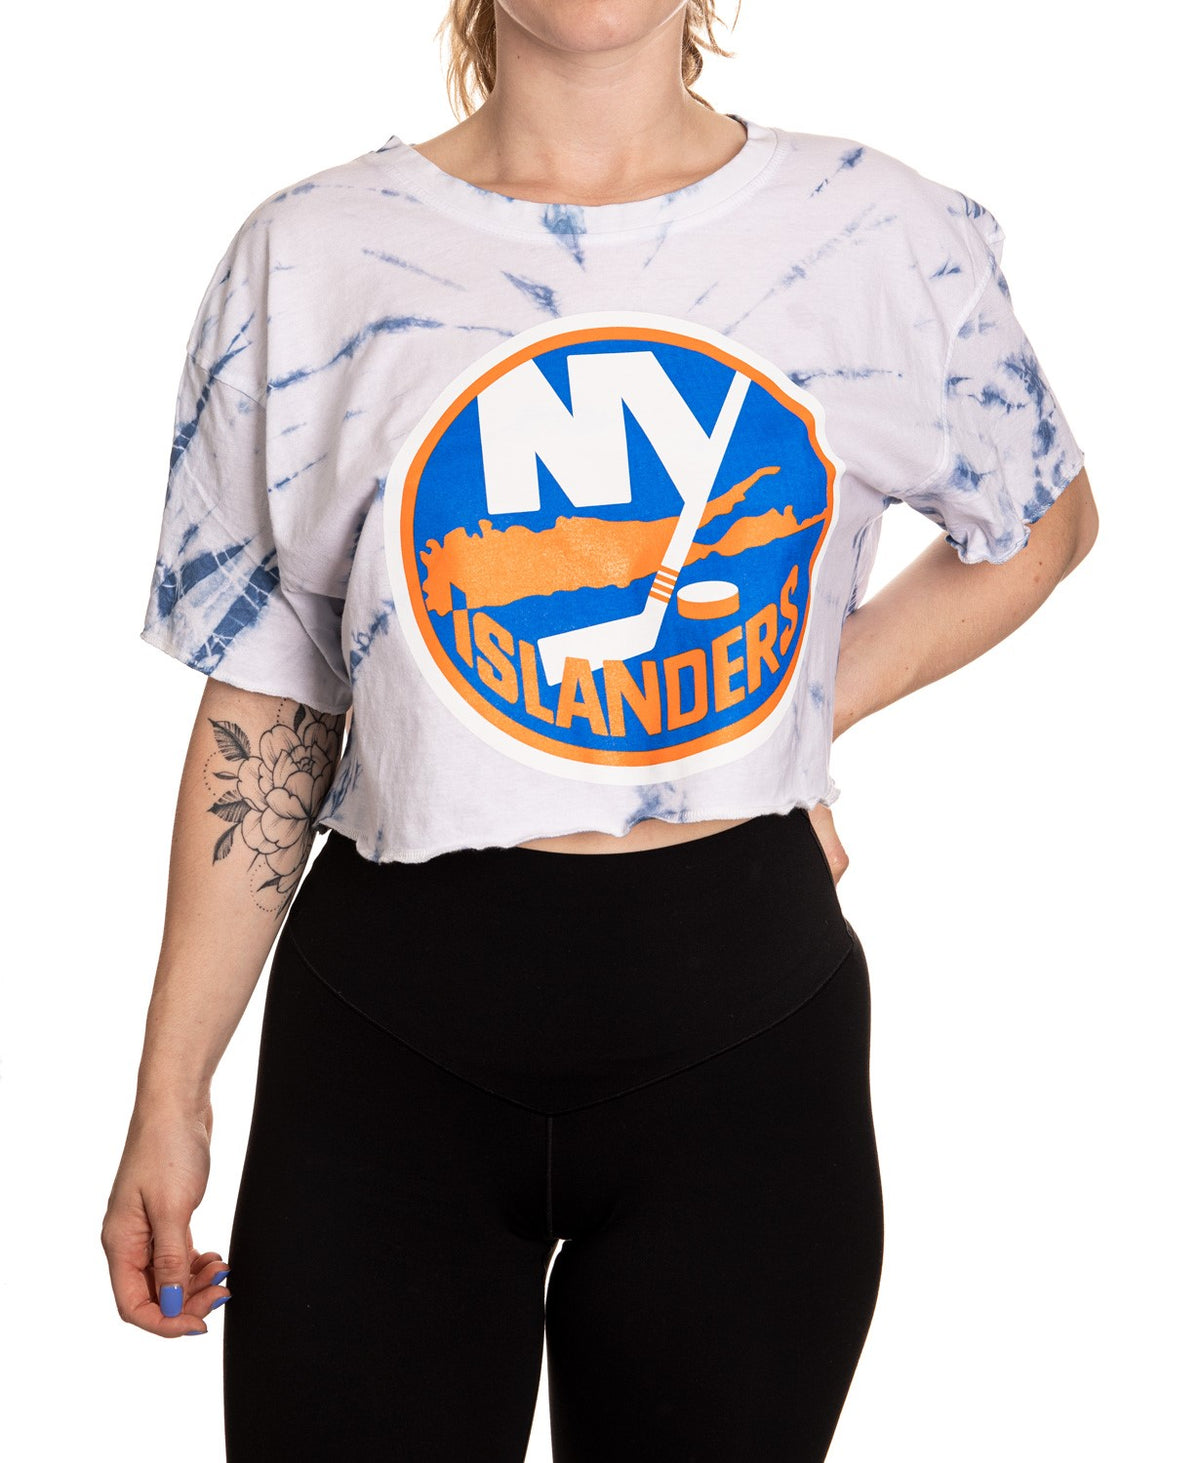 New York Islanders Spiral Tie Dye Crop Top Size Guide